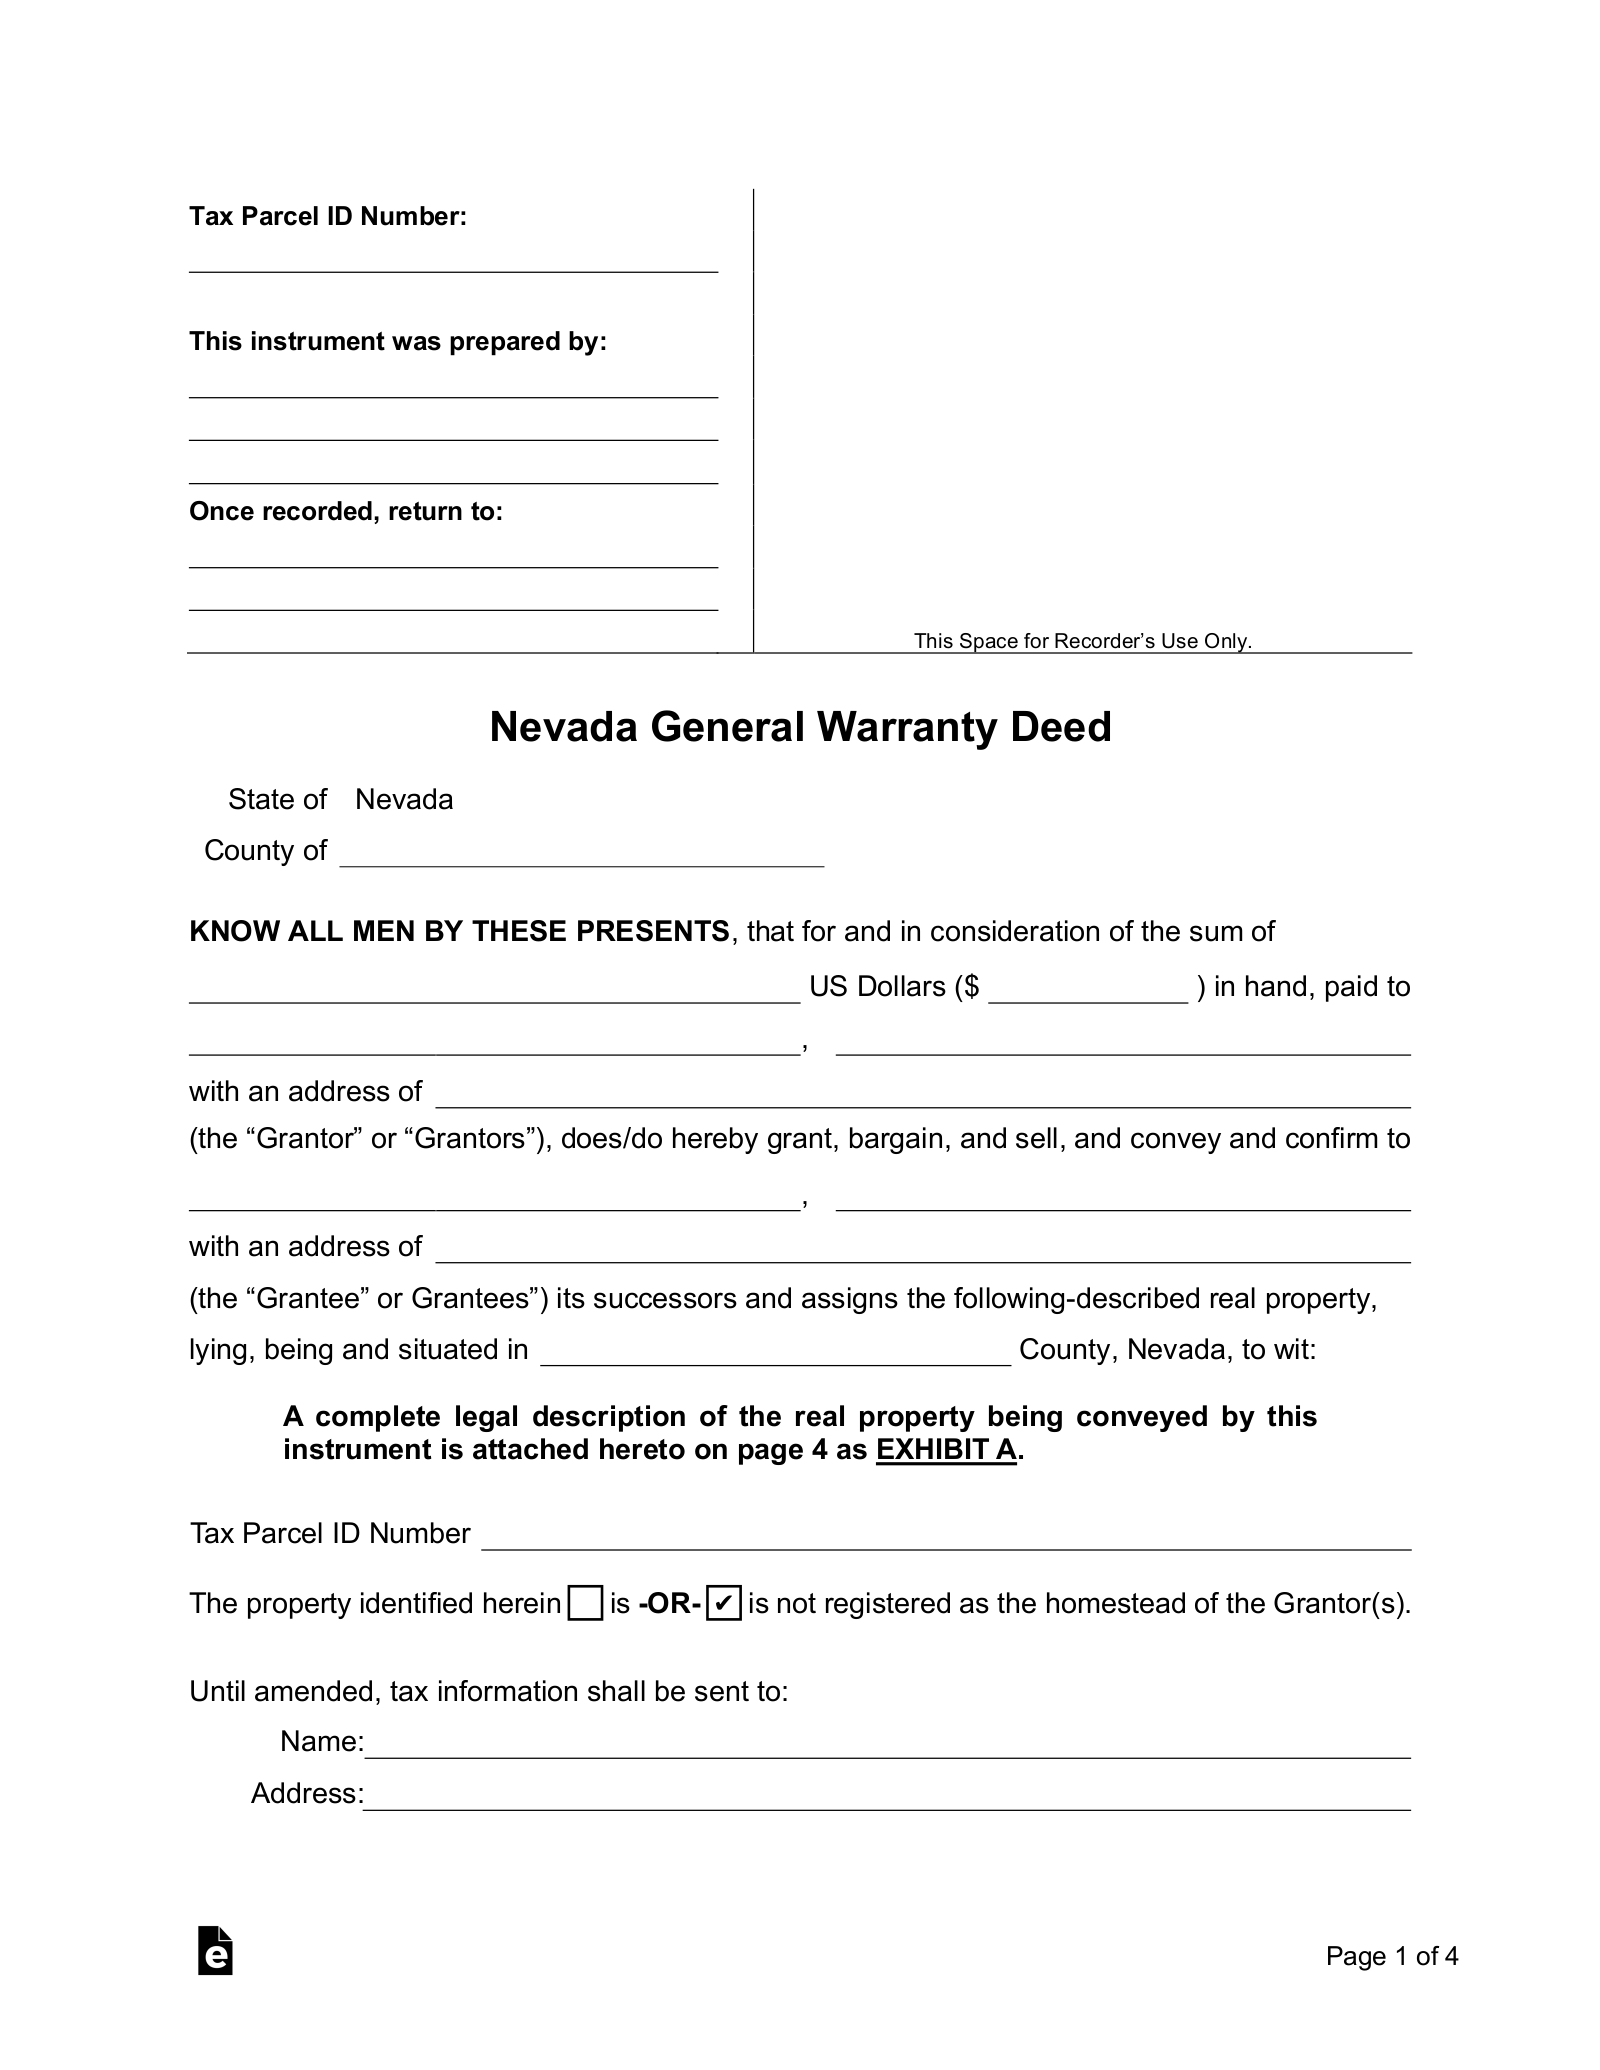 Nevada General Warranty Deed Form